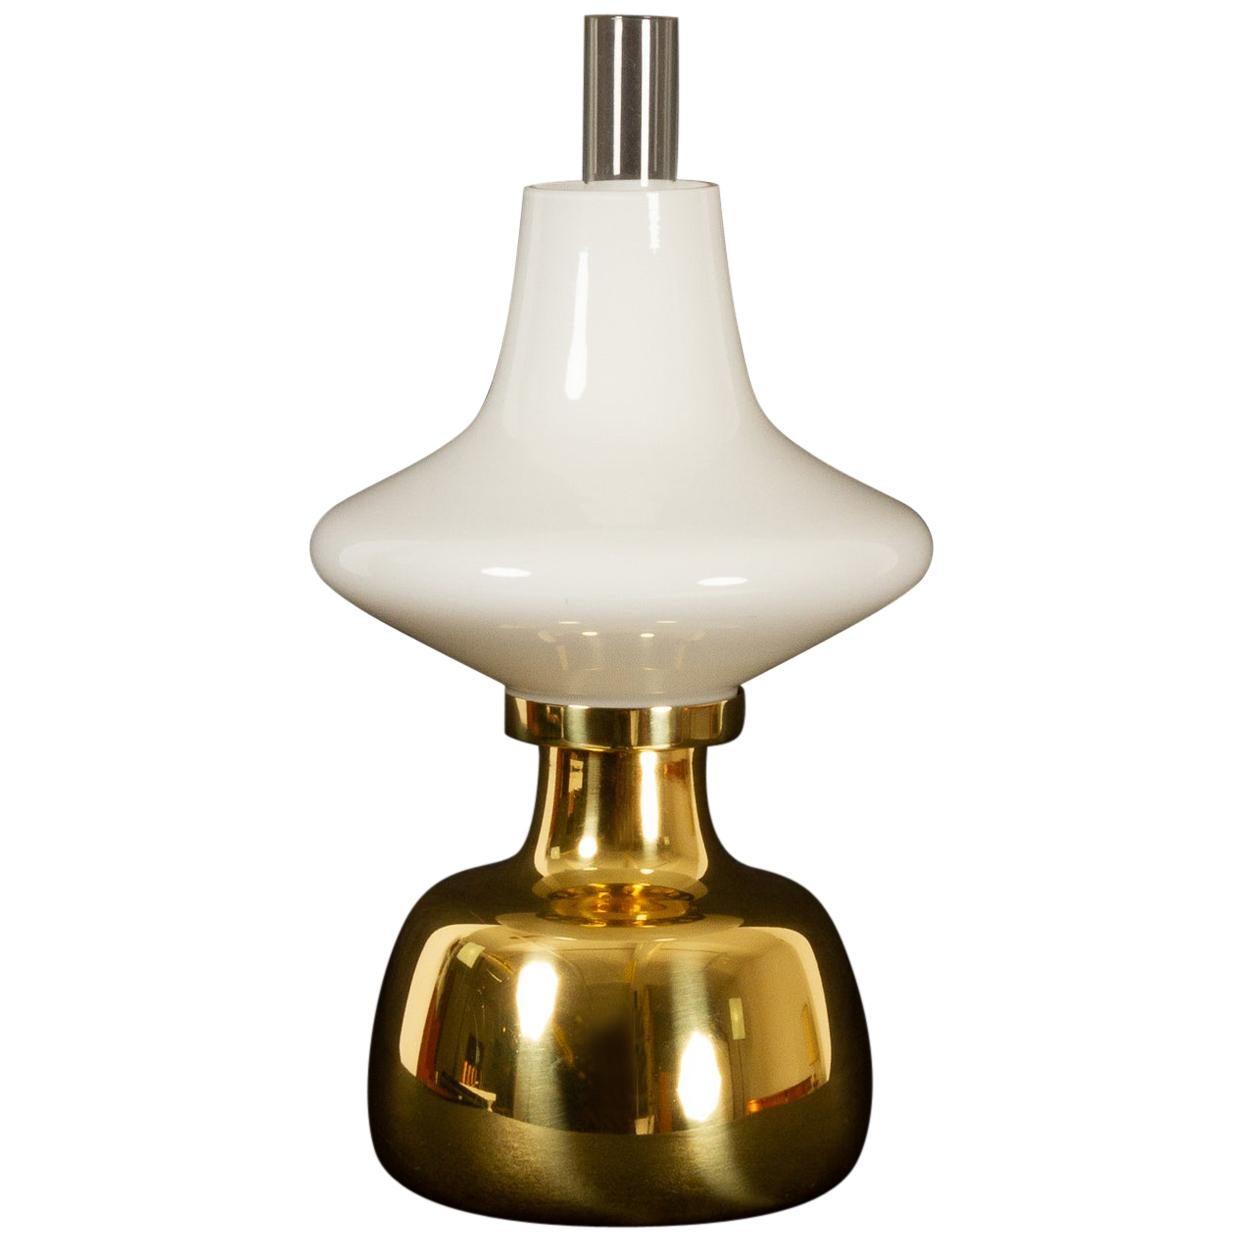 Petronella Lamp by Henning Koppel for Louis Poulsen, 1960s